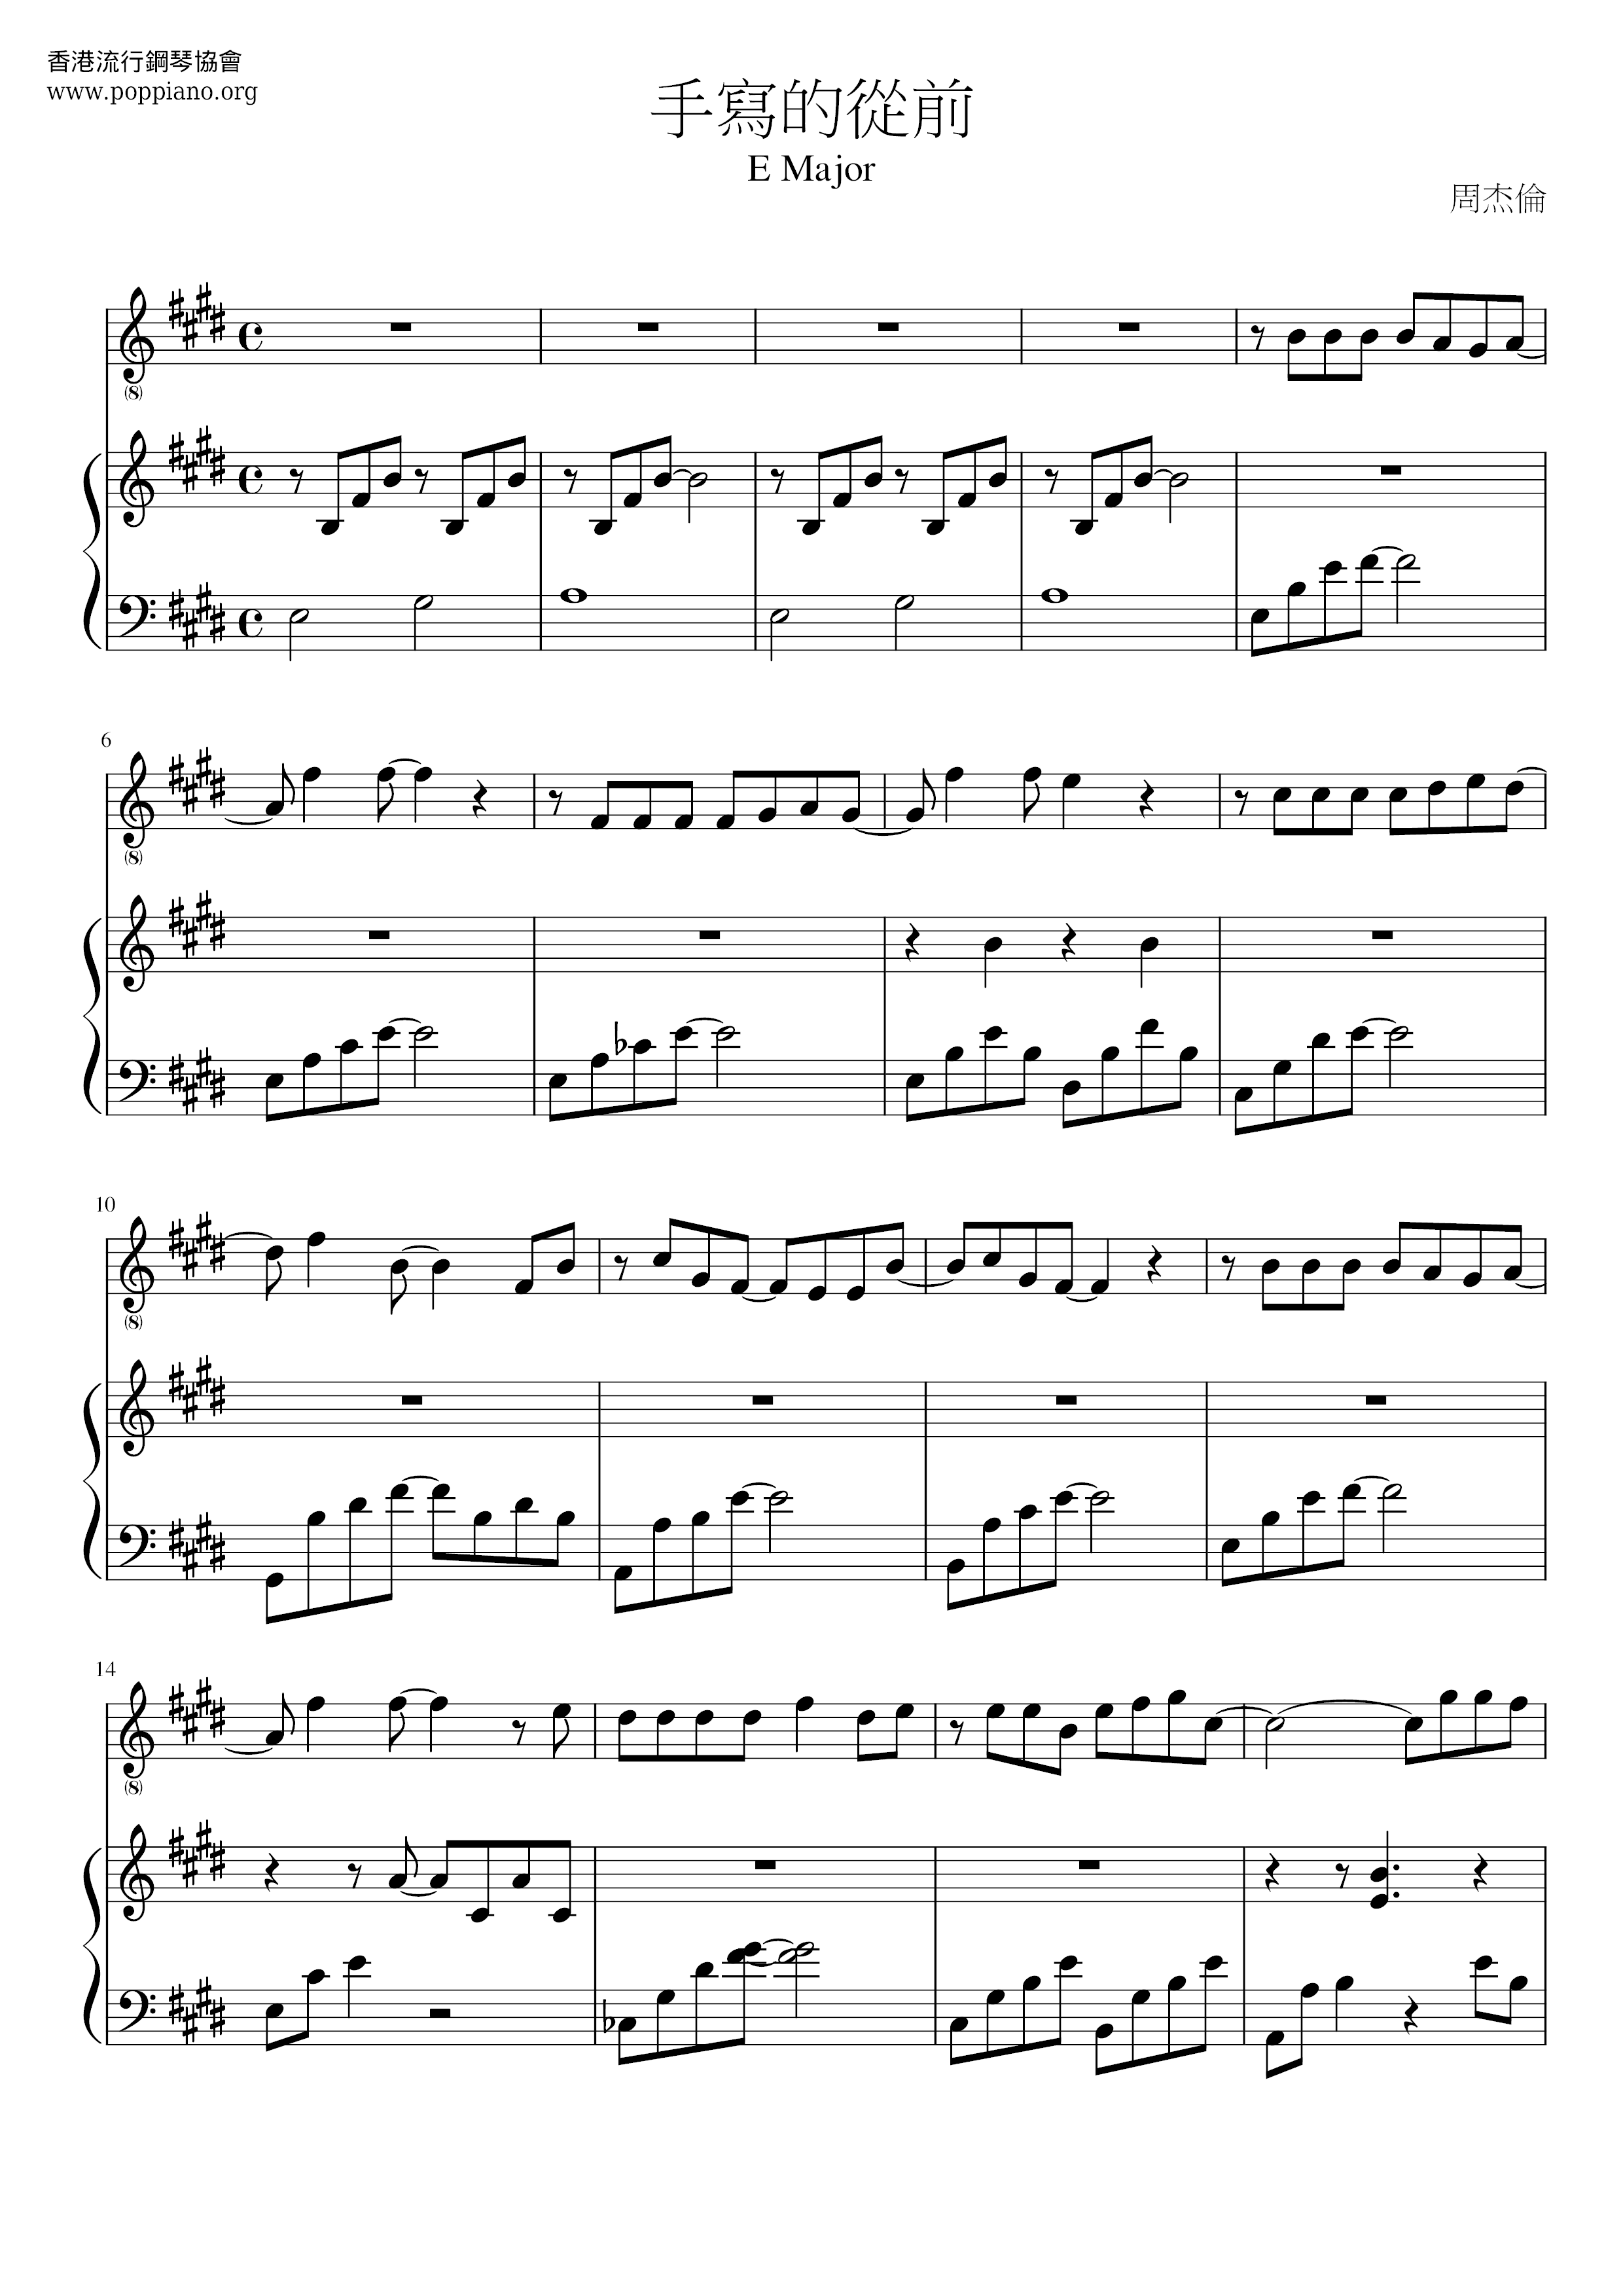 Handwritten In The Past Score